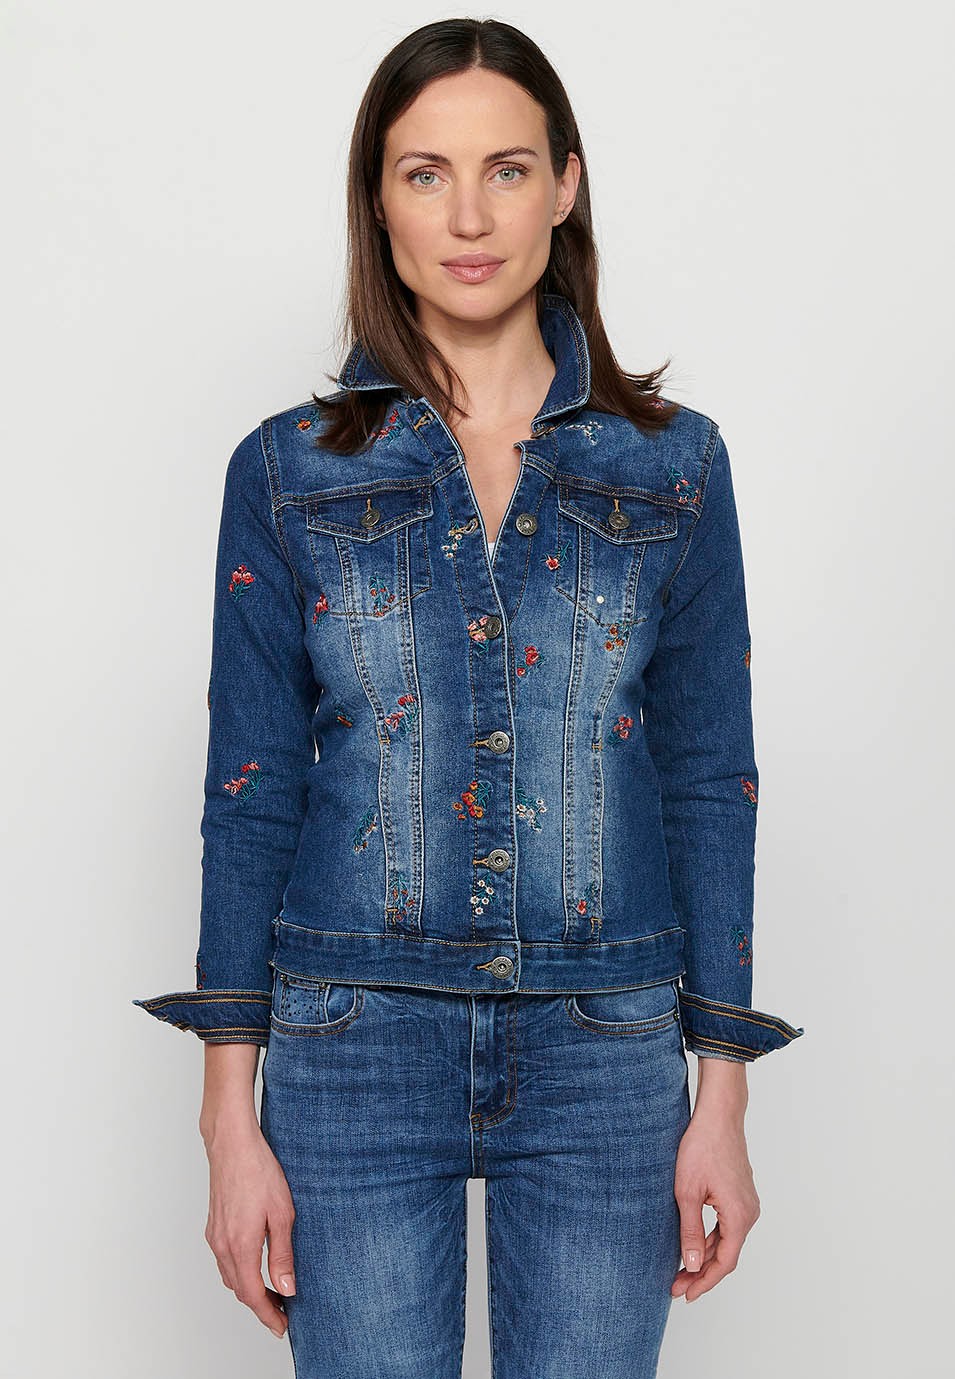 Long sleeve denim jacket, floral embroidery, blue color for women